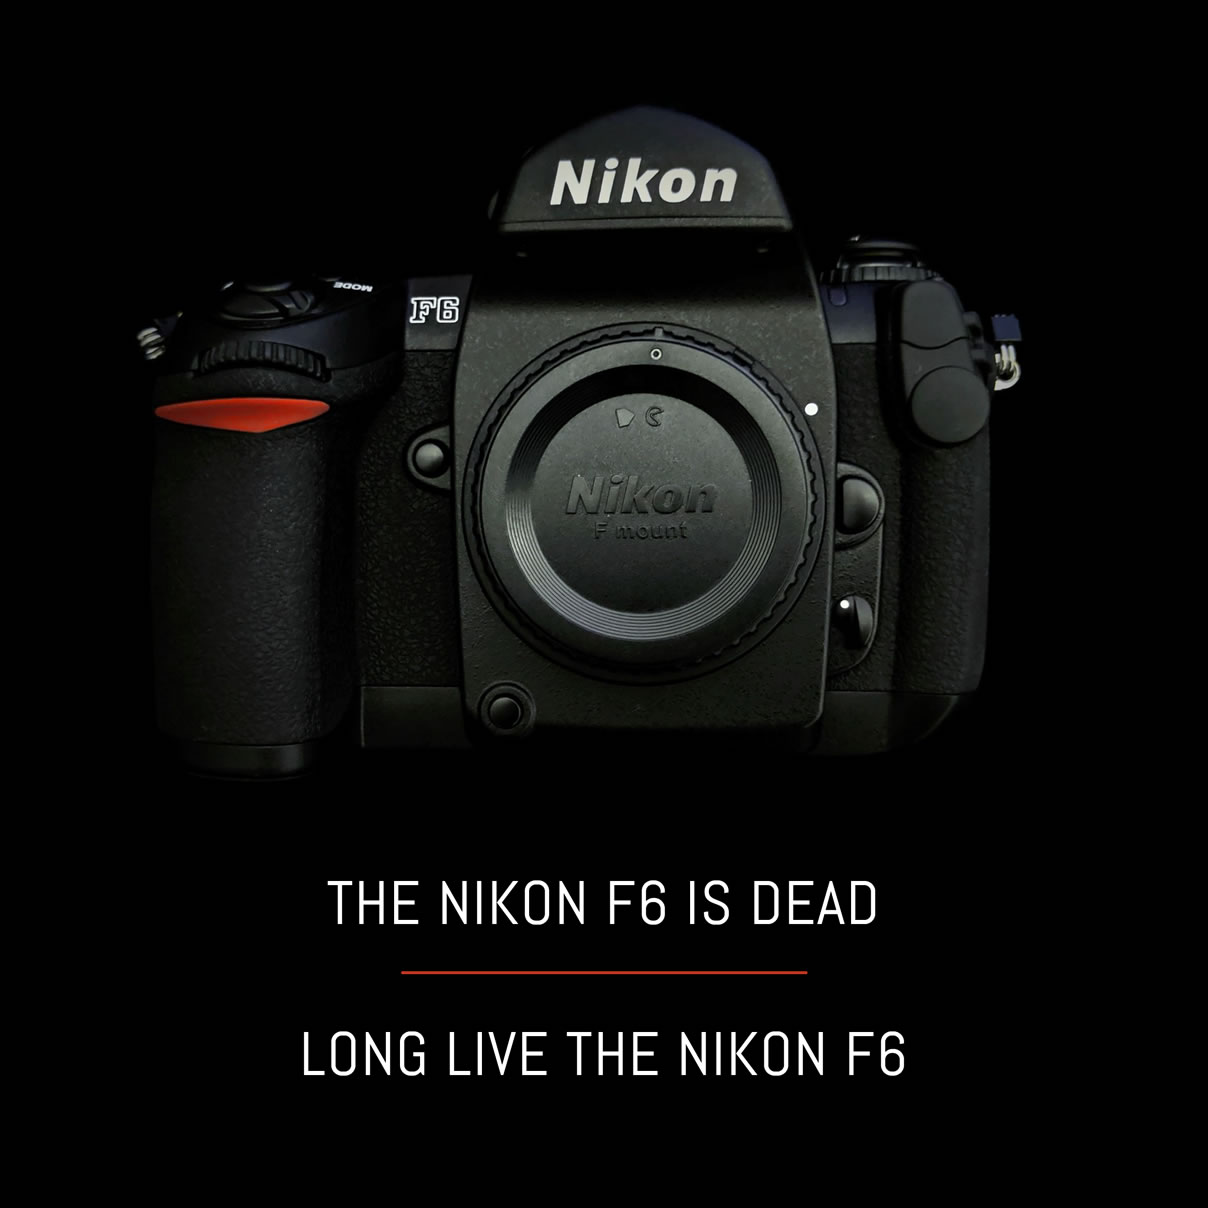 The Nikon F6 is dead, long live the Nikon F6! - EMULSIVE